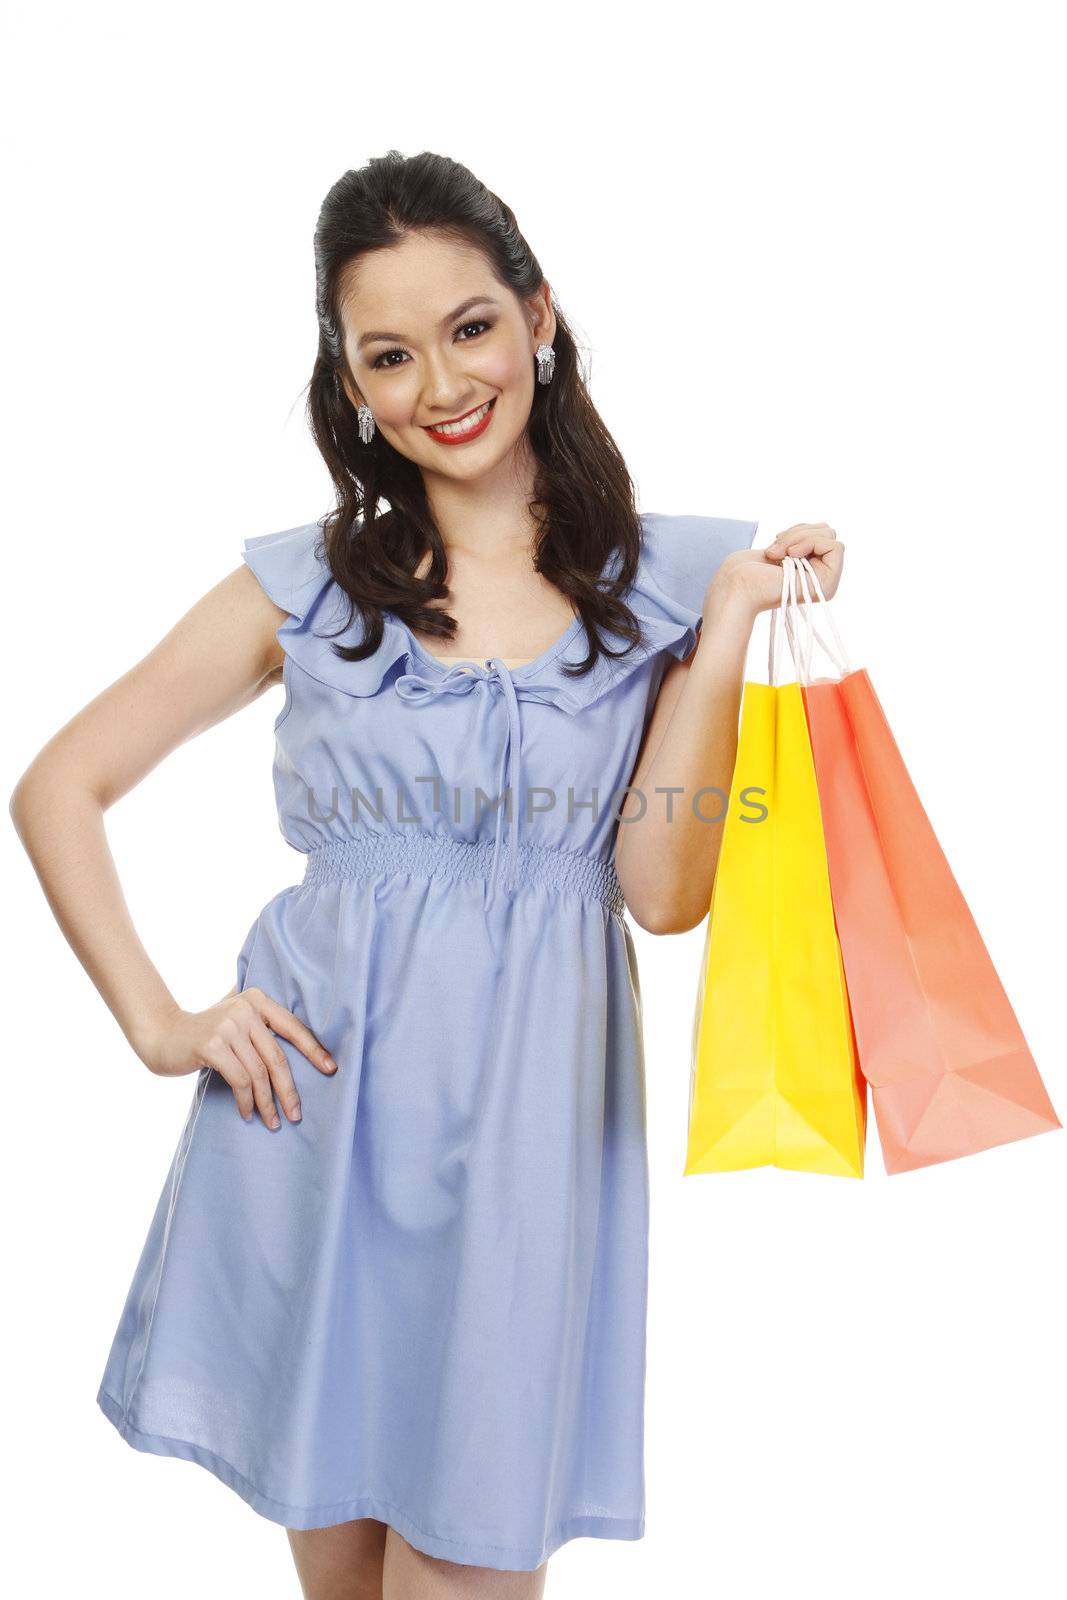 Fashionable Shopper by rnl